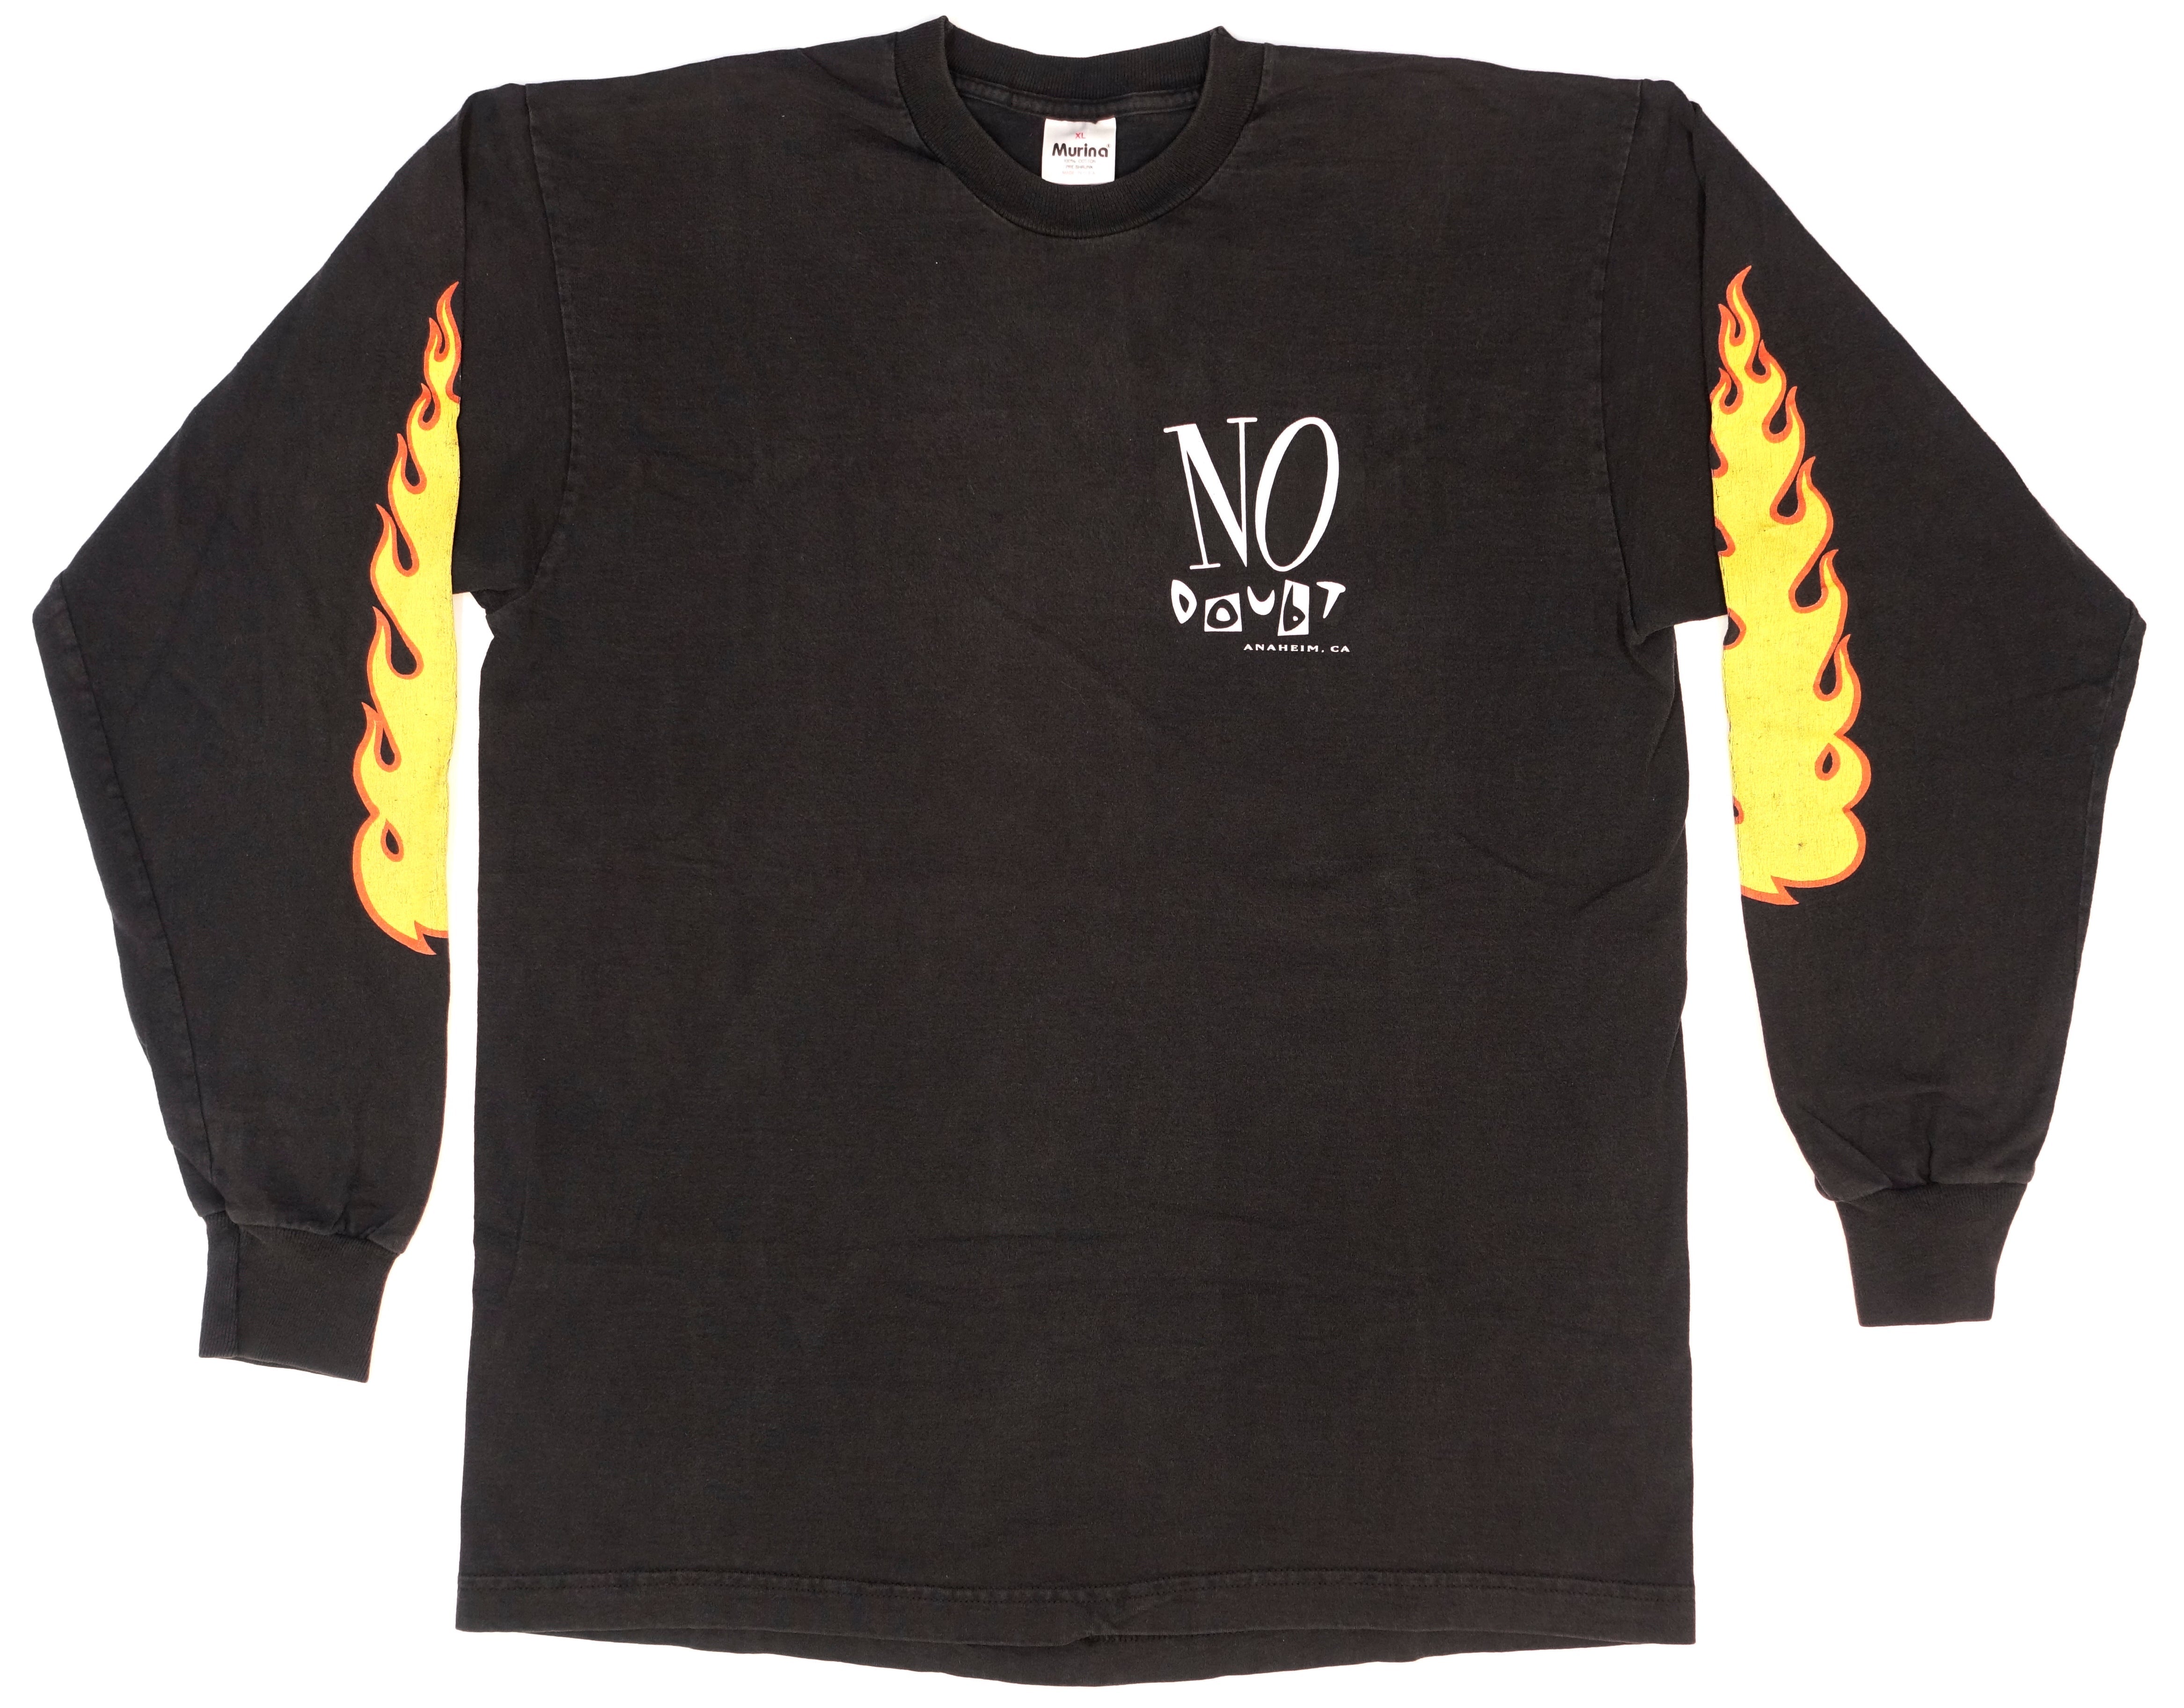 No Doubt - Tragic Kingdom 1995 Long Sleeve Tour Shirt Size XL